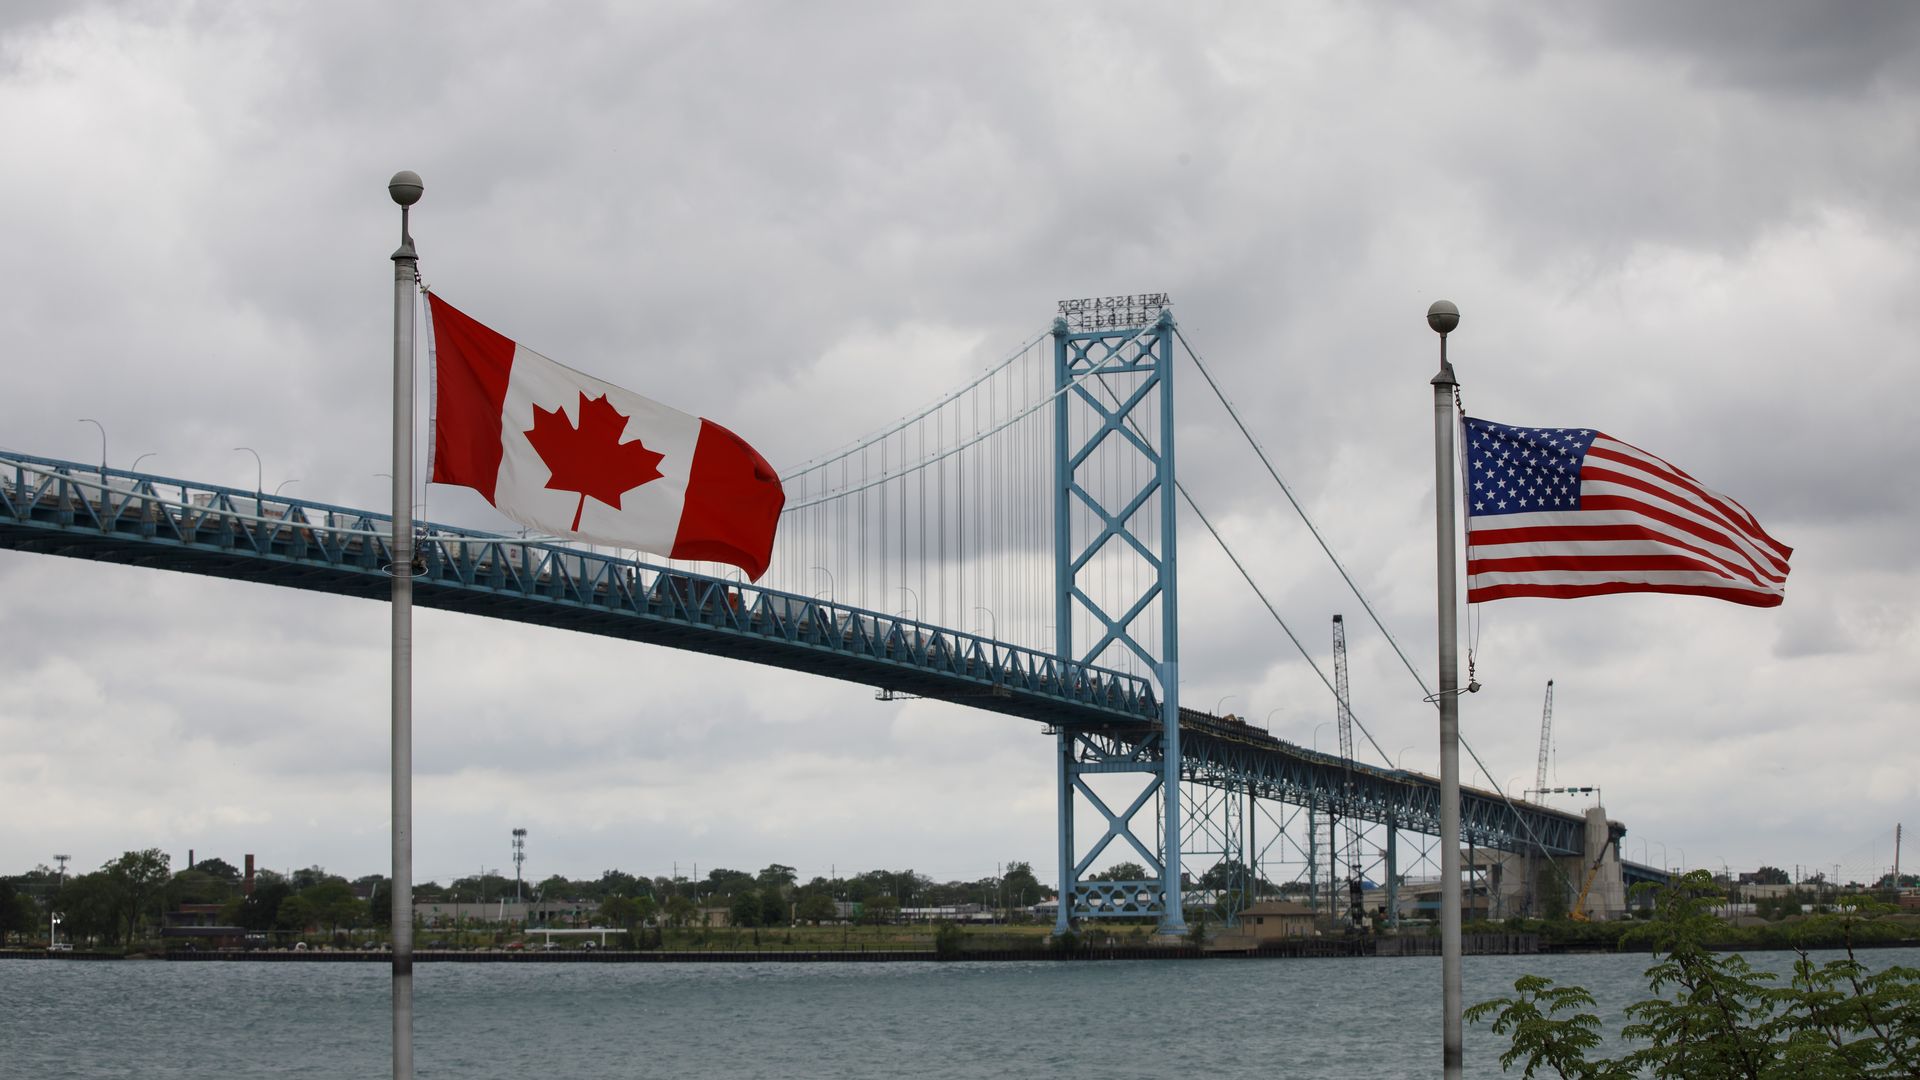 Ambassador Bridge connecting US and Canada